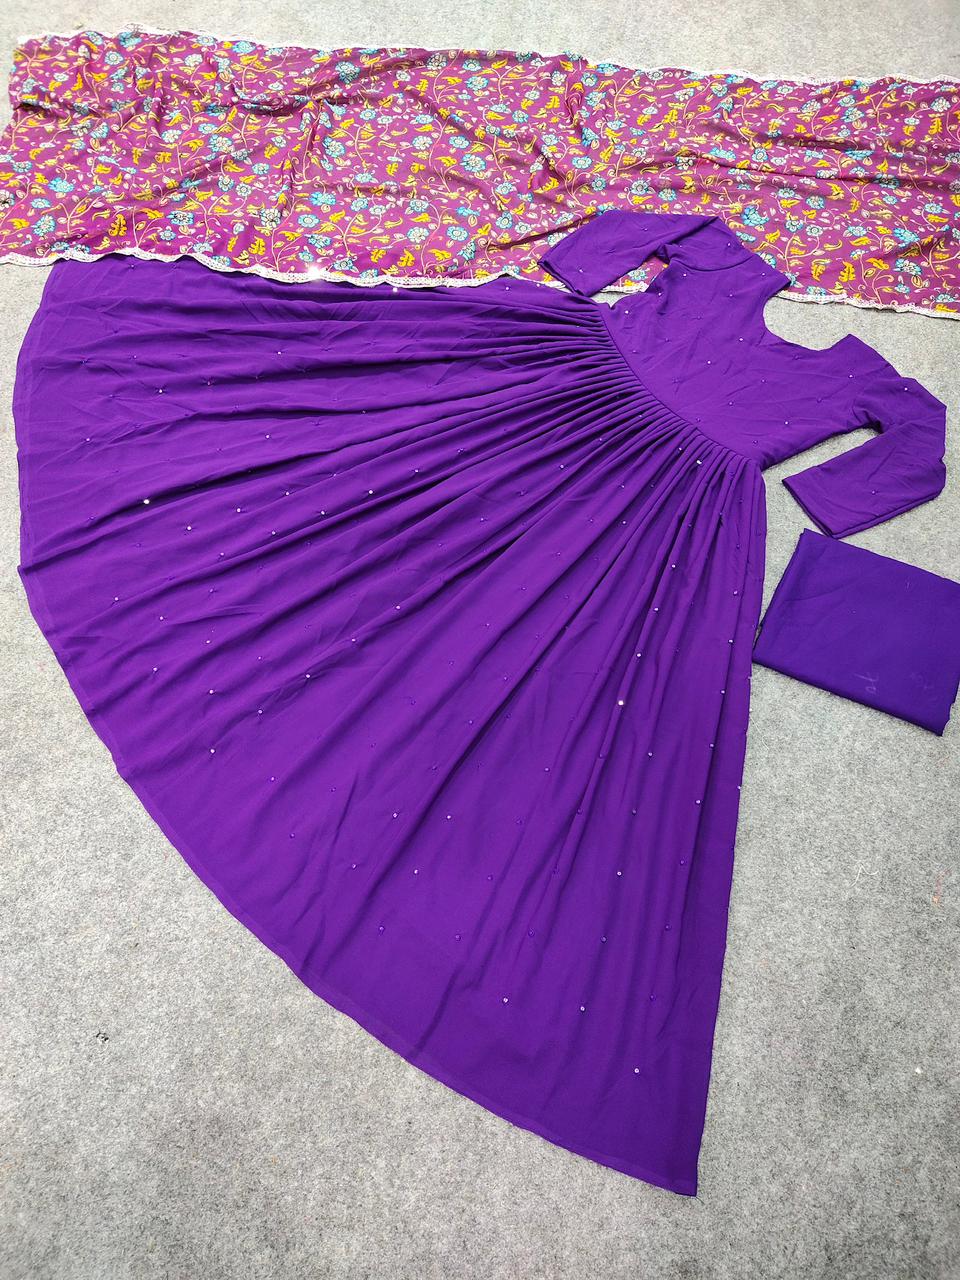 Angrakha style dress की cutting और stitching करना सीखिए। Pinterest inspired dress  cut and stitch. - YouTube